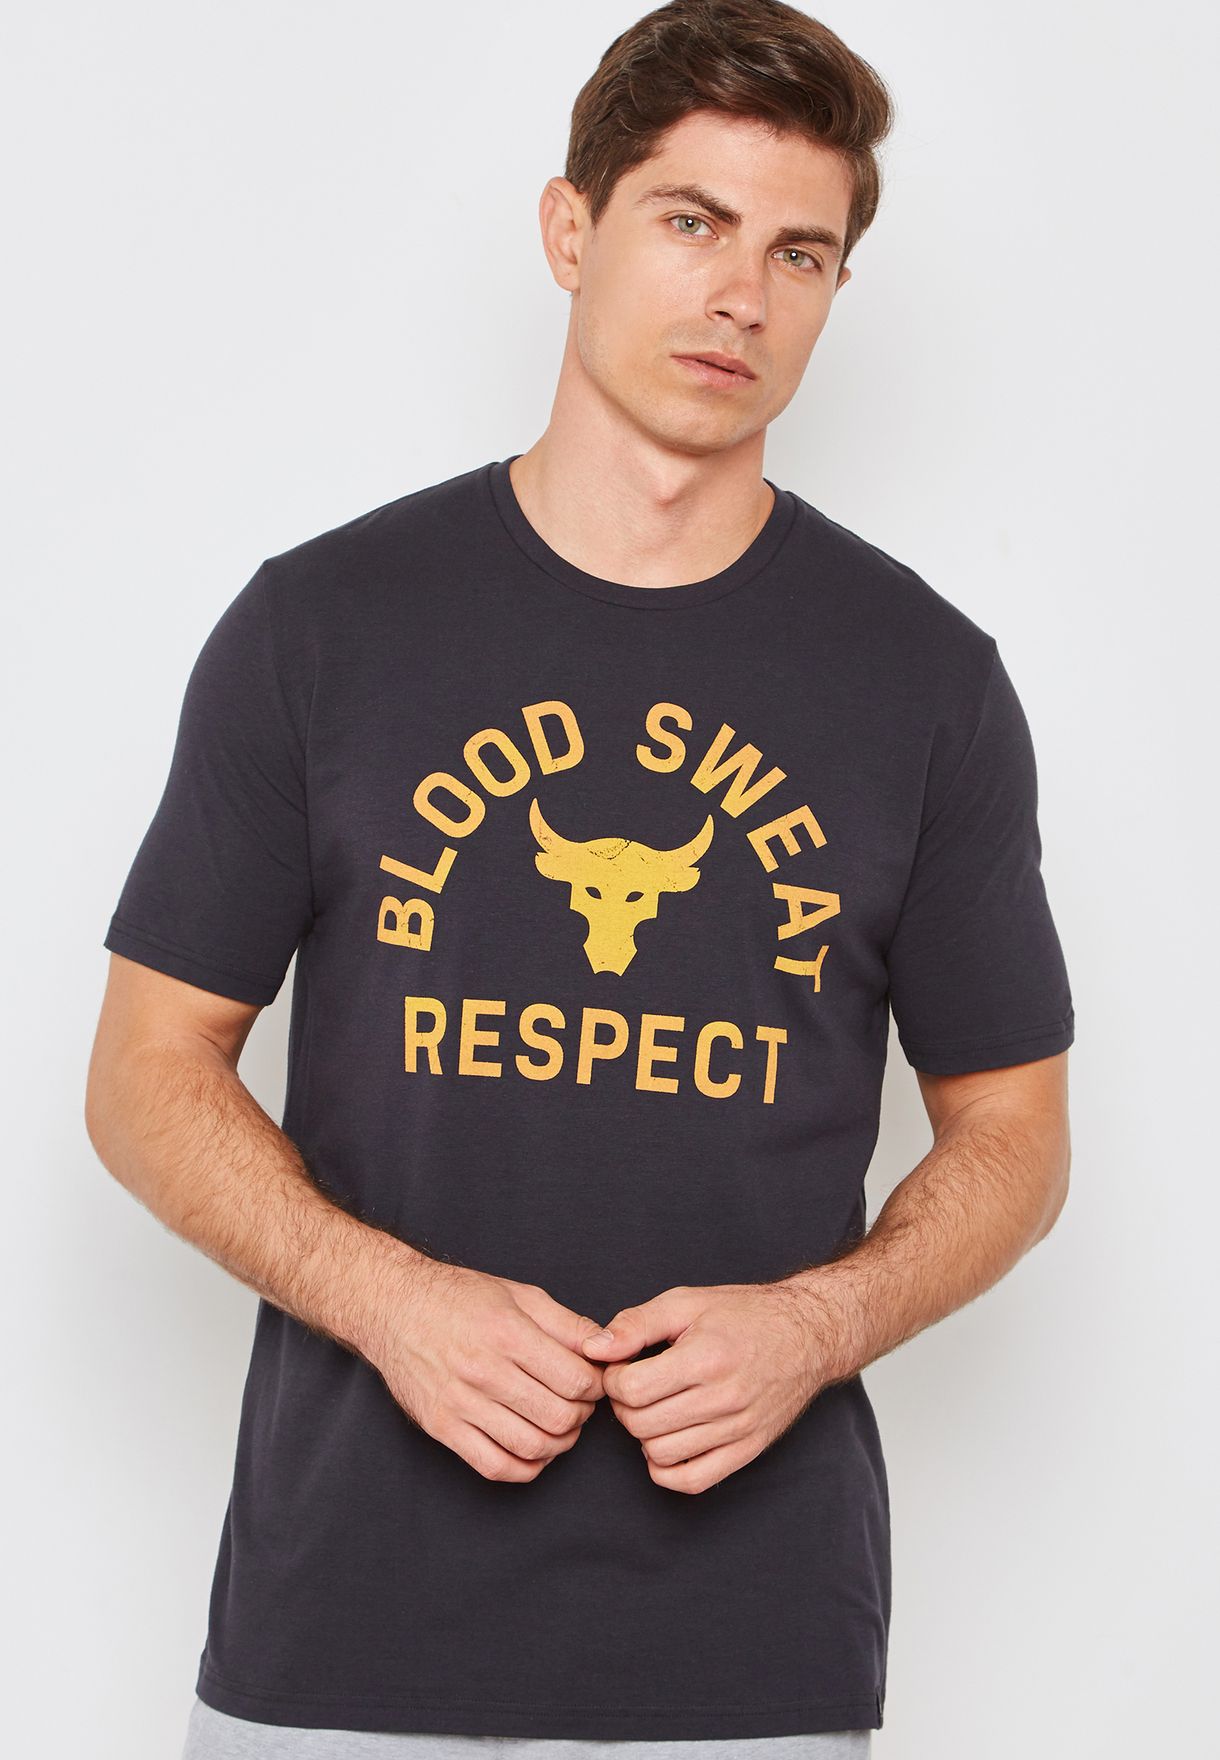 under armour blood sweat respect t shirt